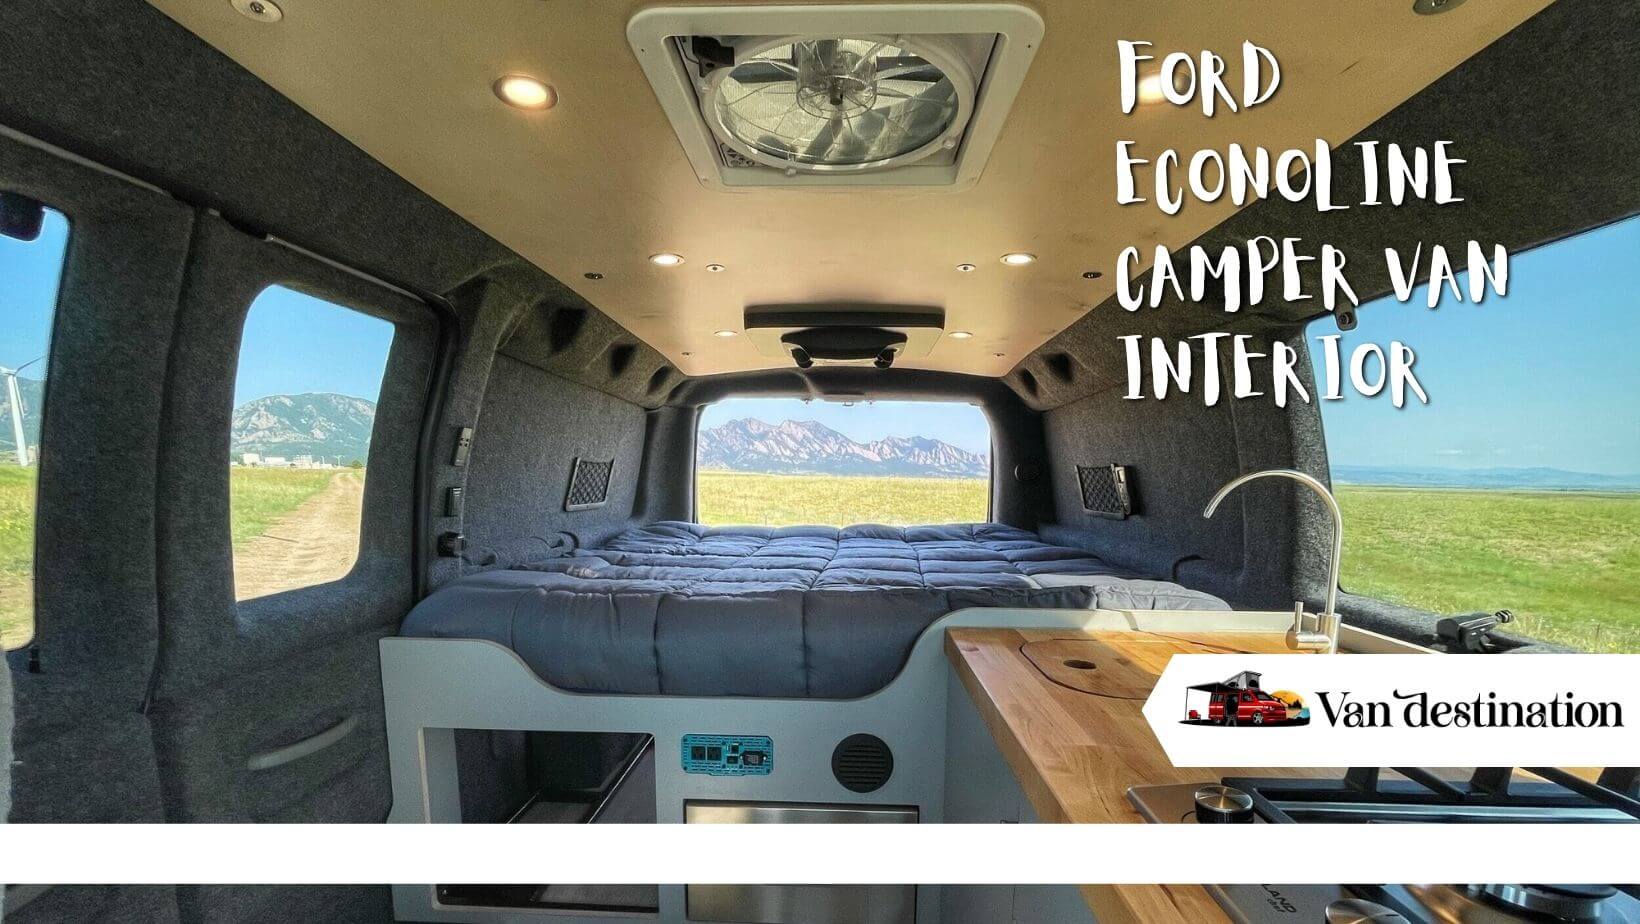 Ford Econoline Camper Van Interior